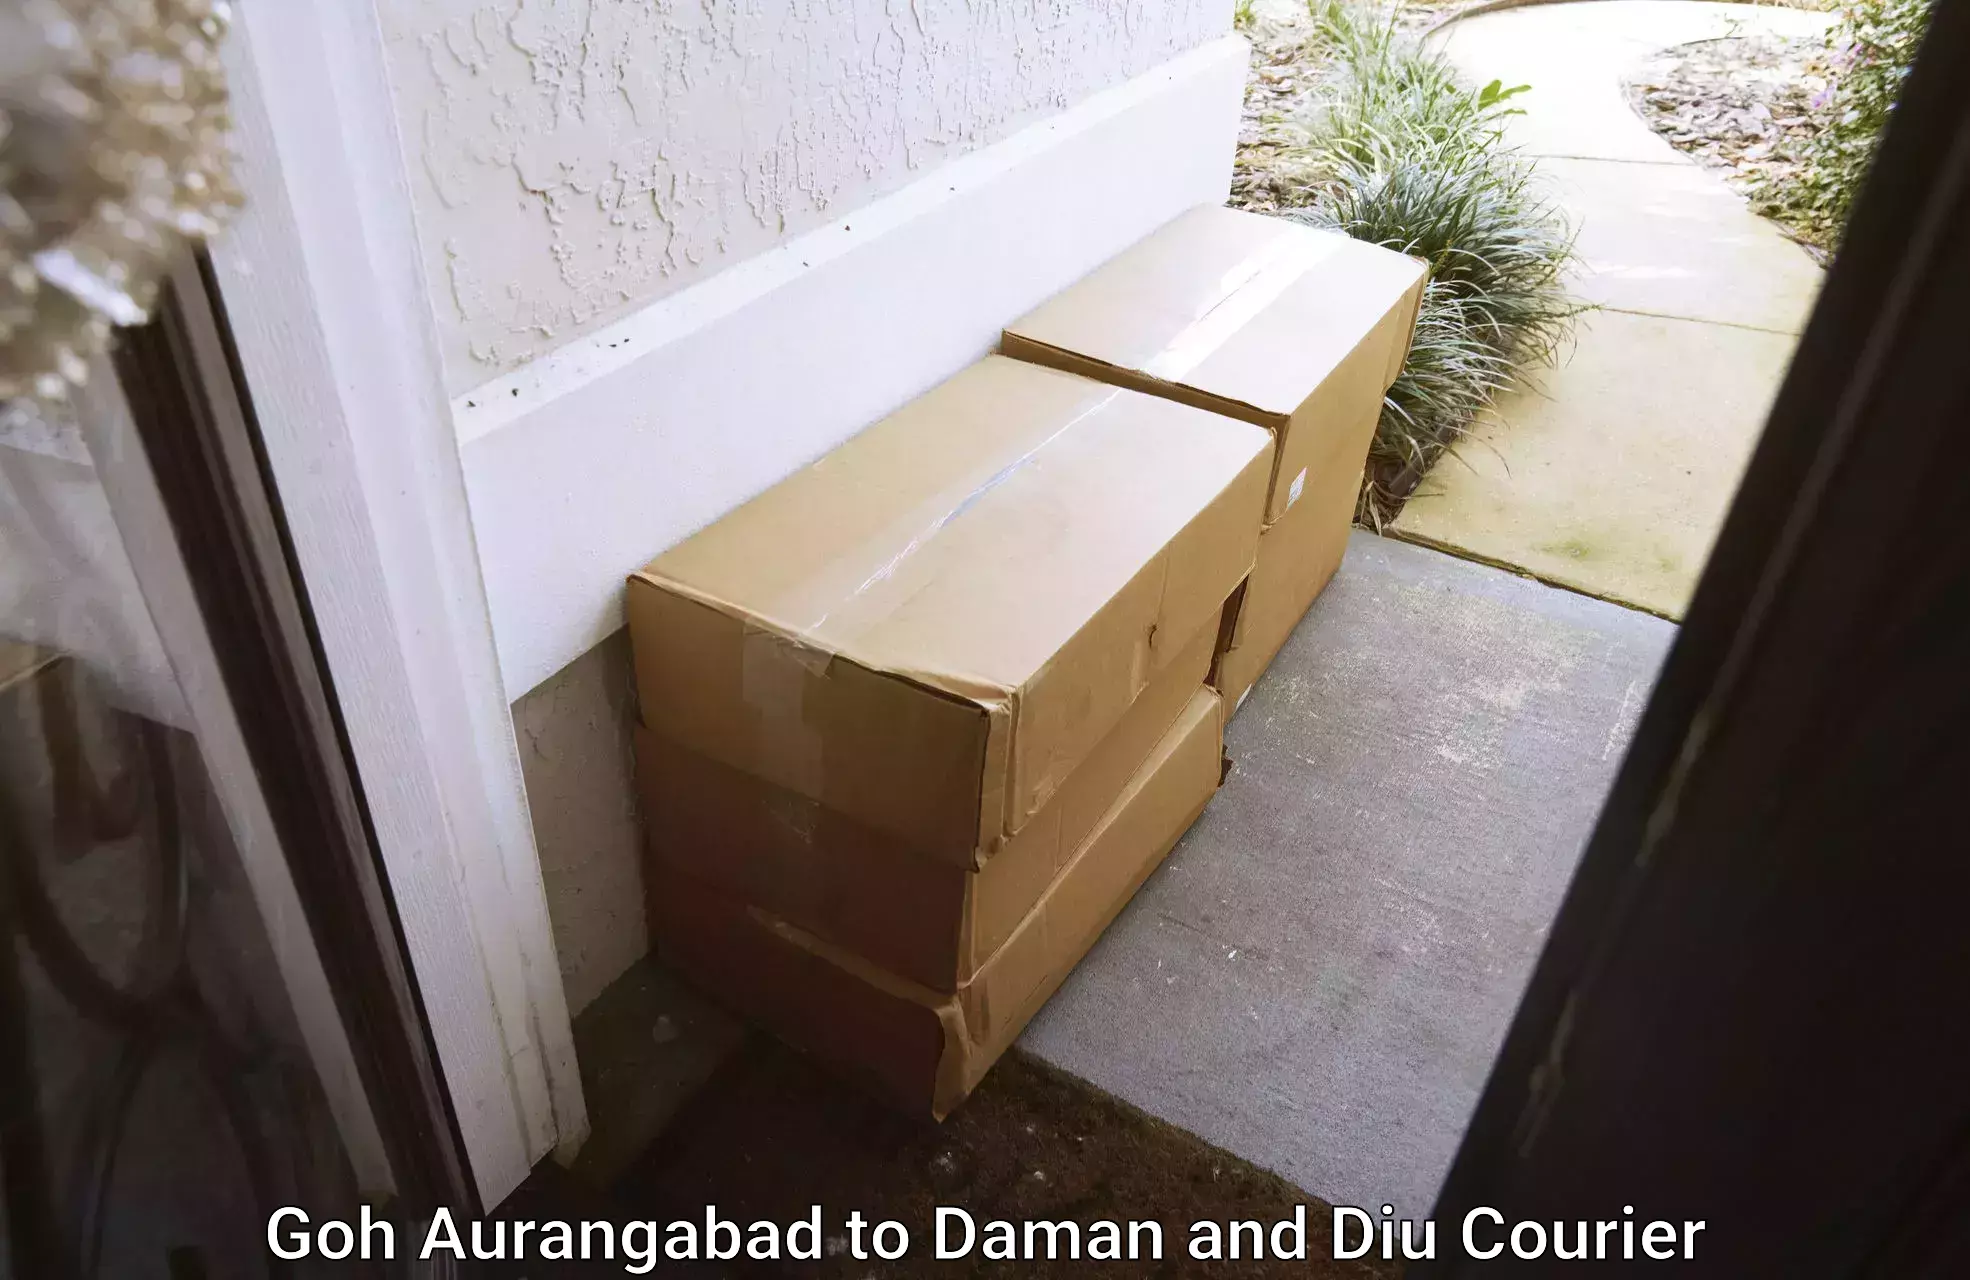 Furniture delivery service Goh Aurangabad to Diu